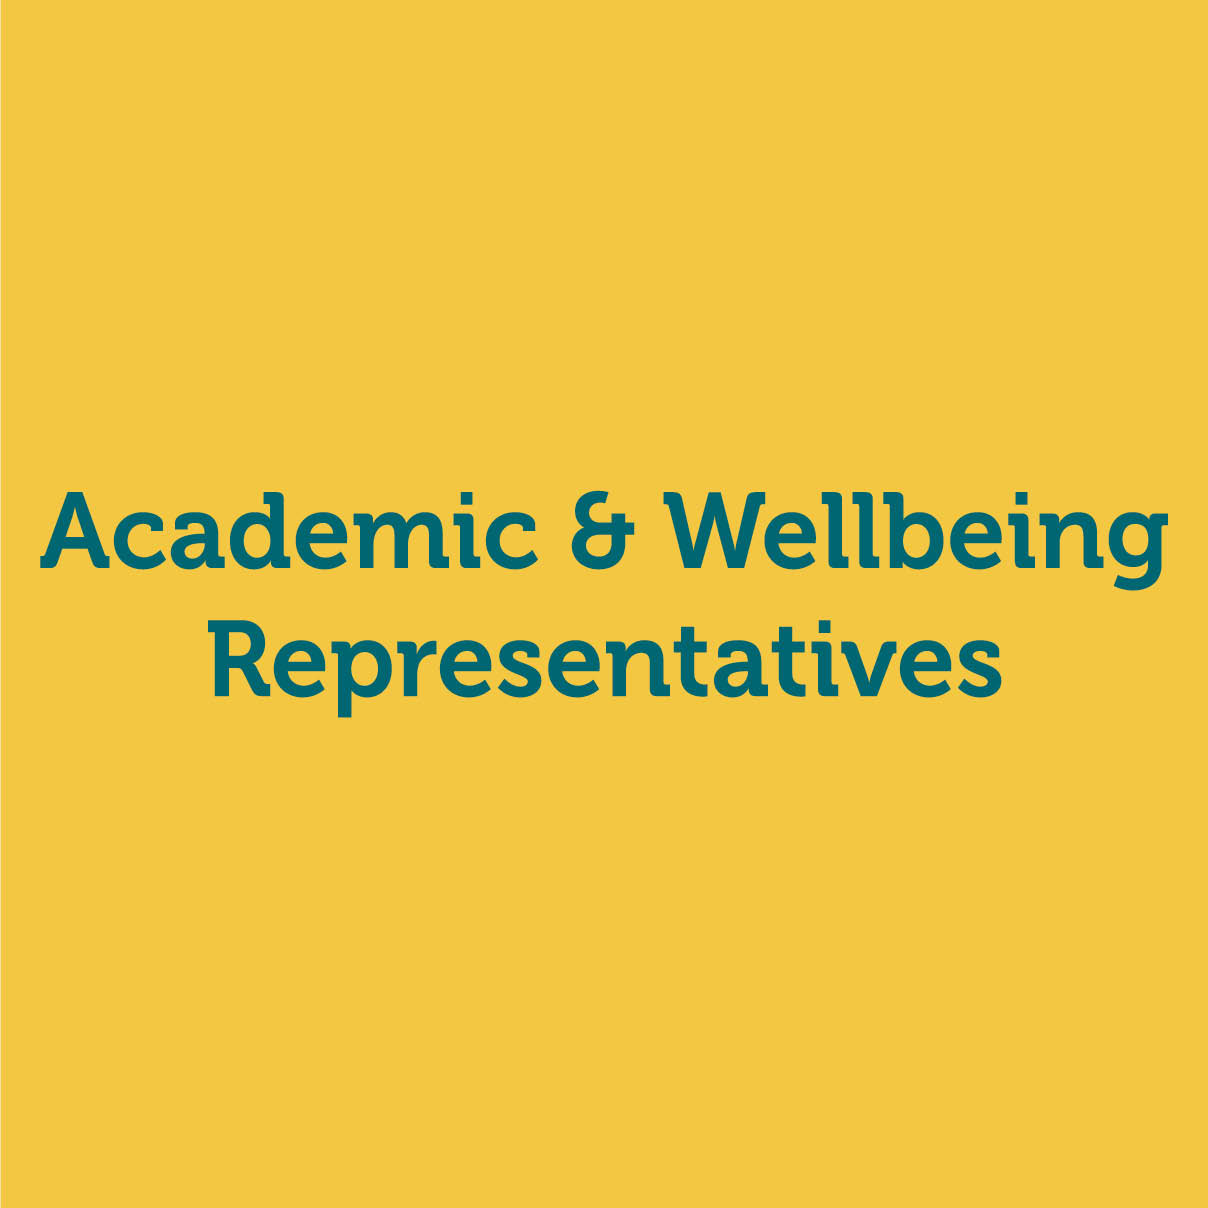 Academic & Wellbeing Representatives